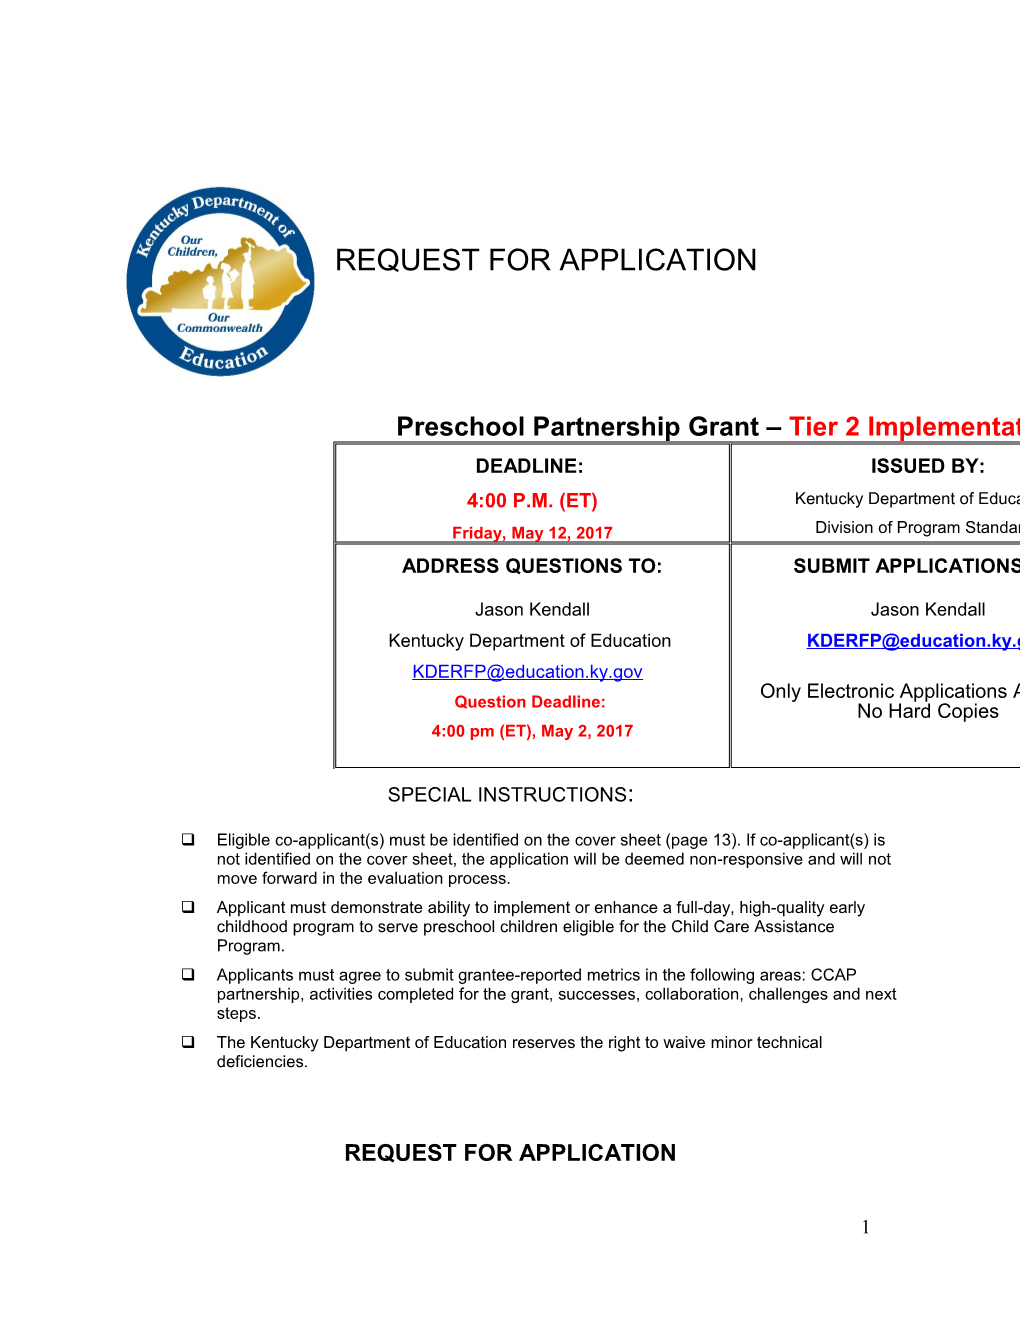 Preschool Partnership Grant Tier 2 Implementation Request for Application